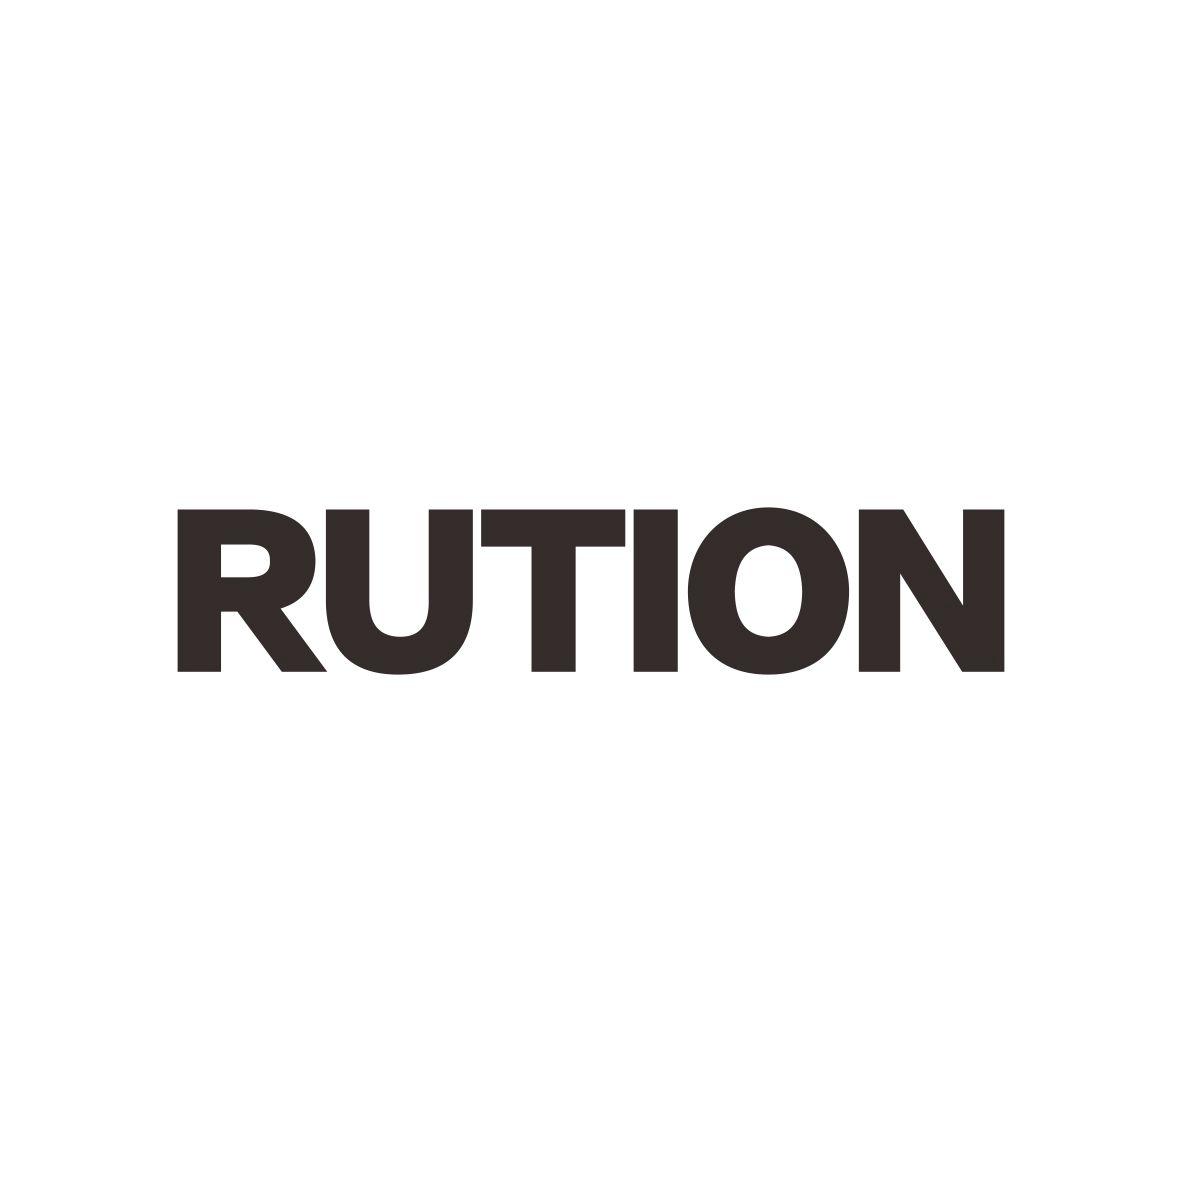 RUTION商标图片